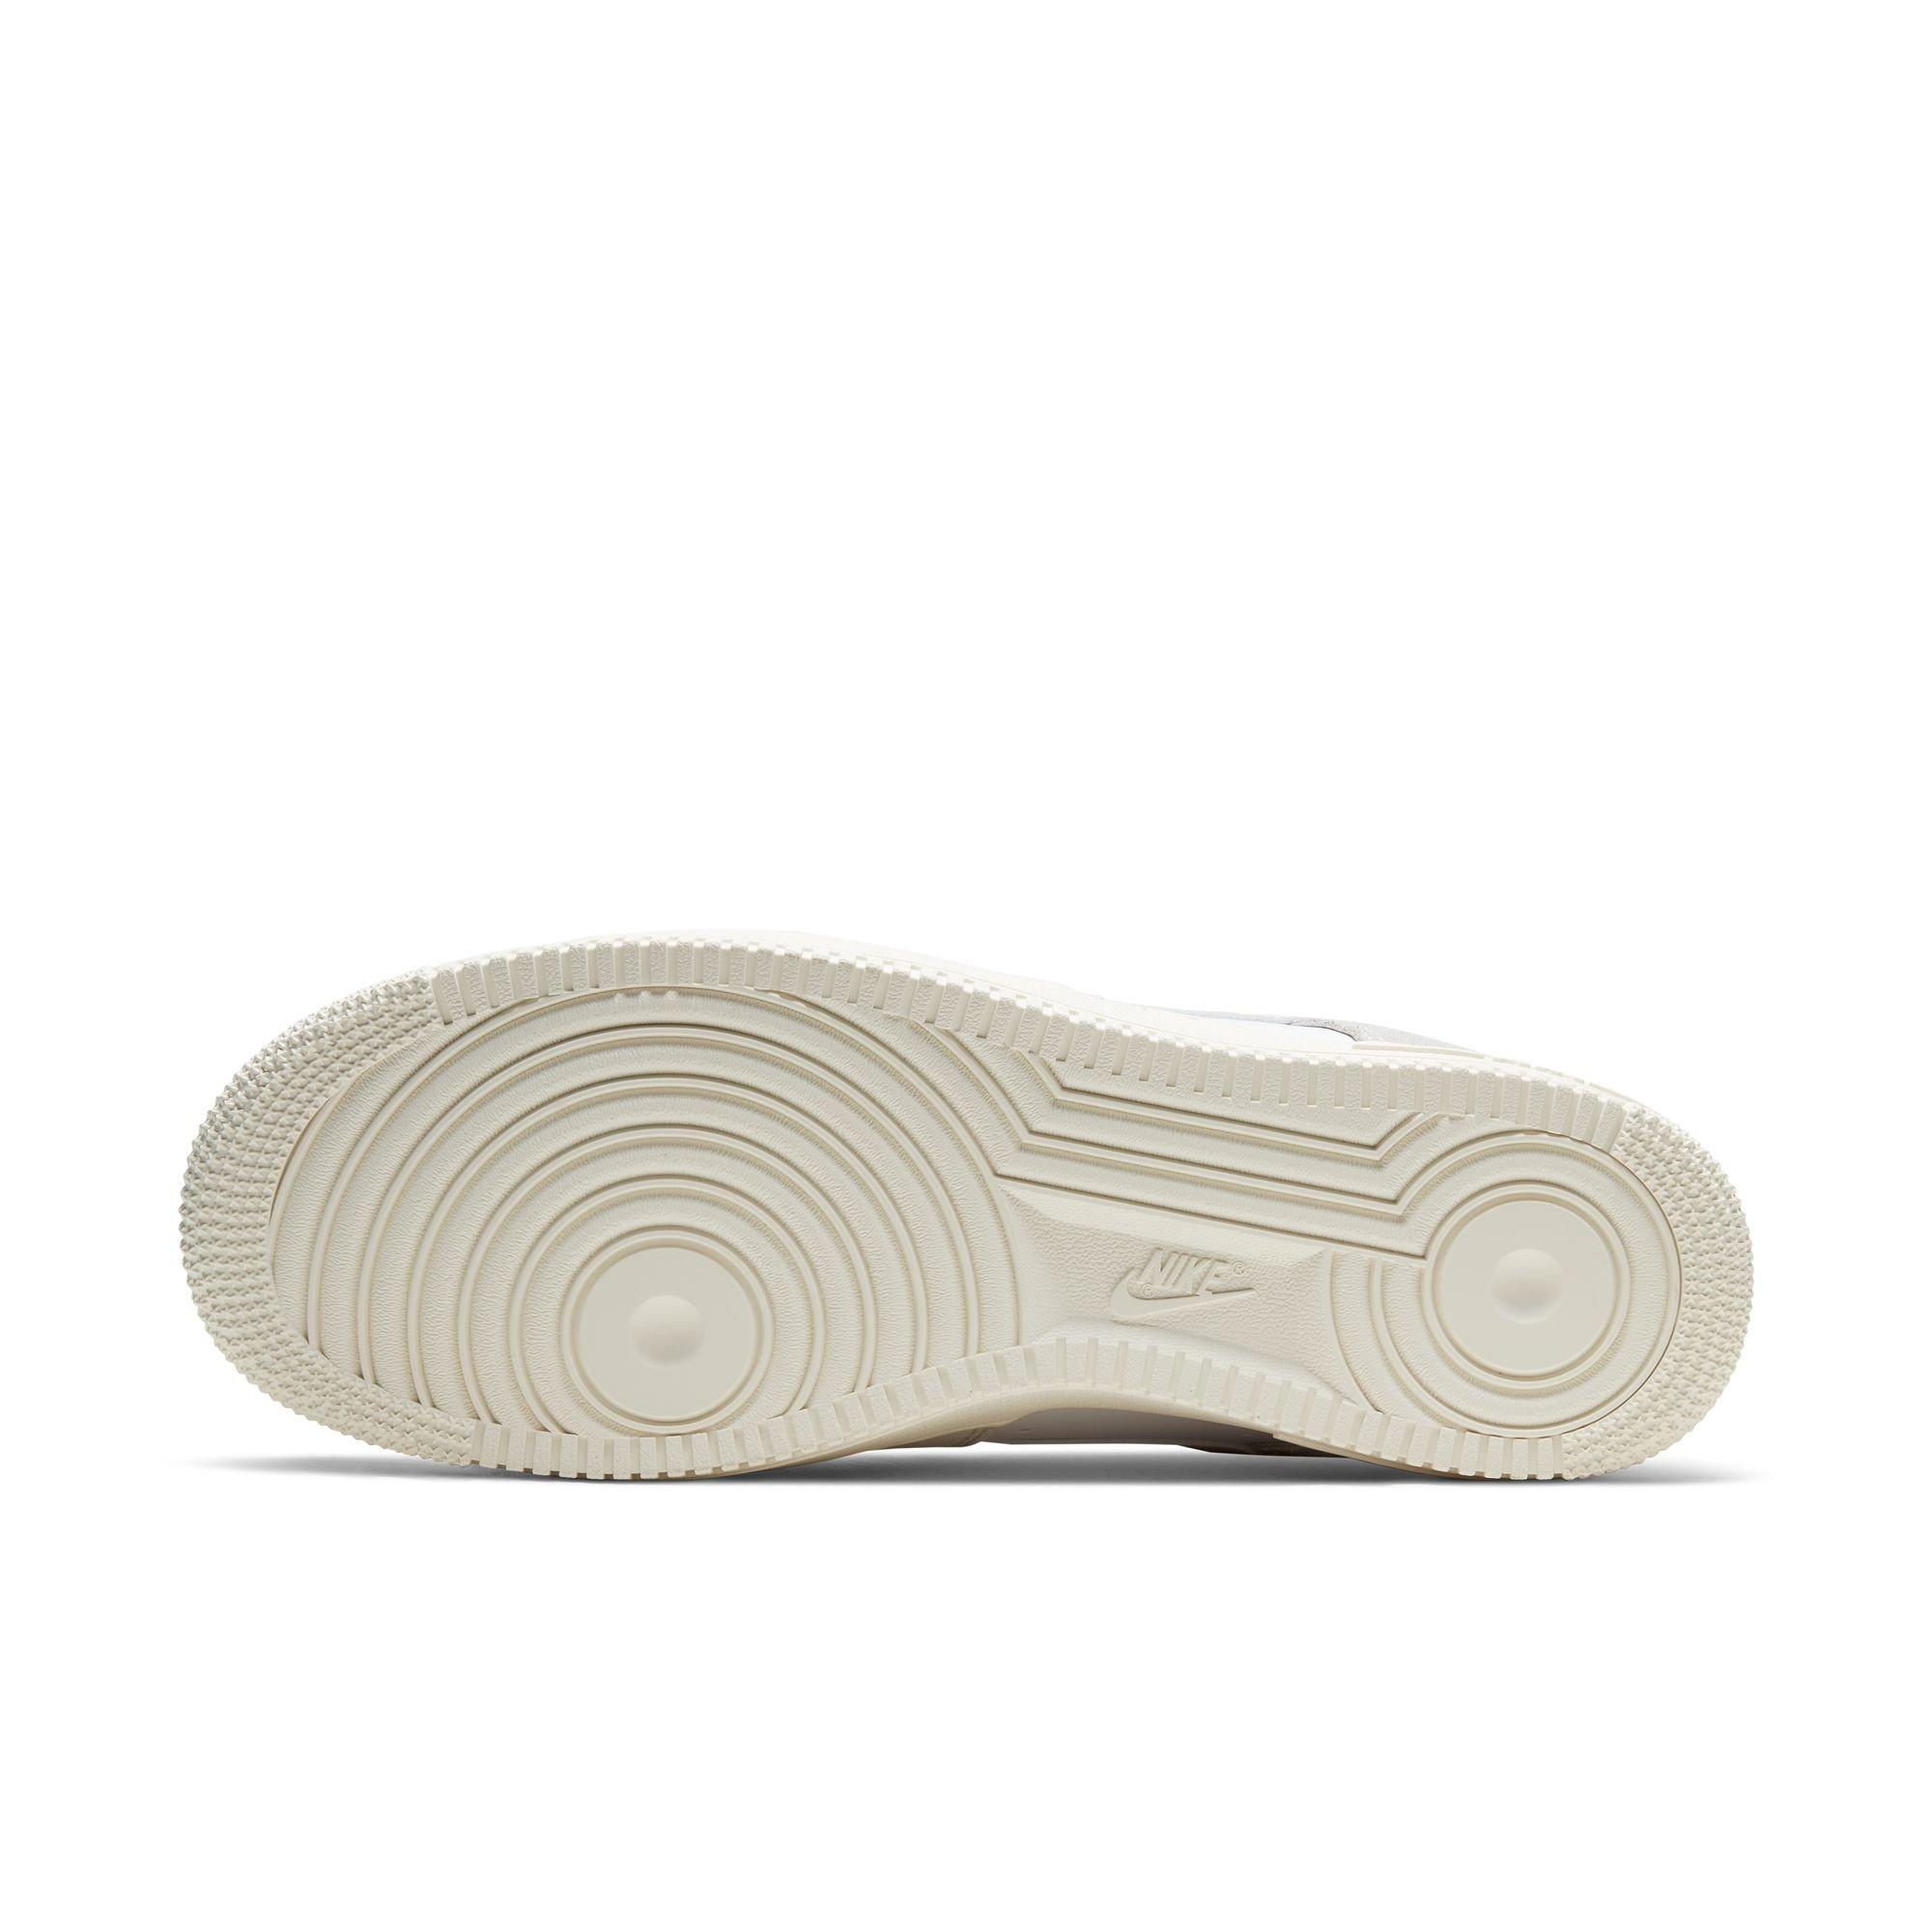 Nike Air Force 1 LV8 White/Sail/Platinum Tint Men's Shoe